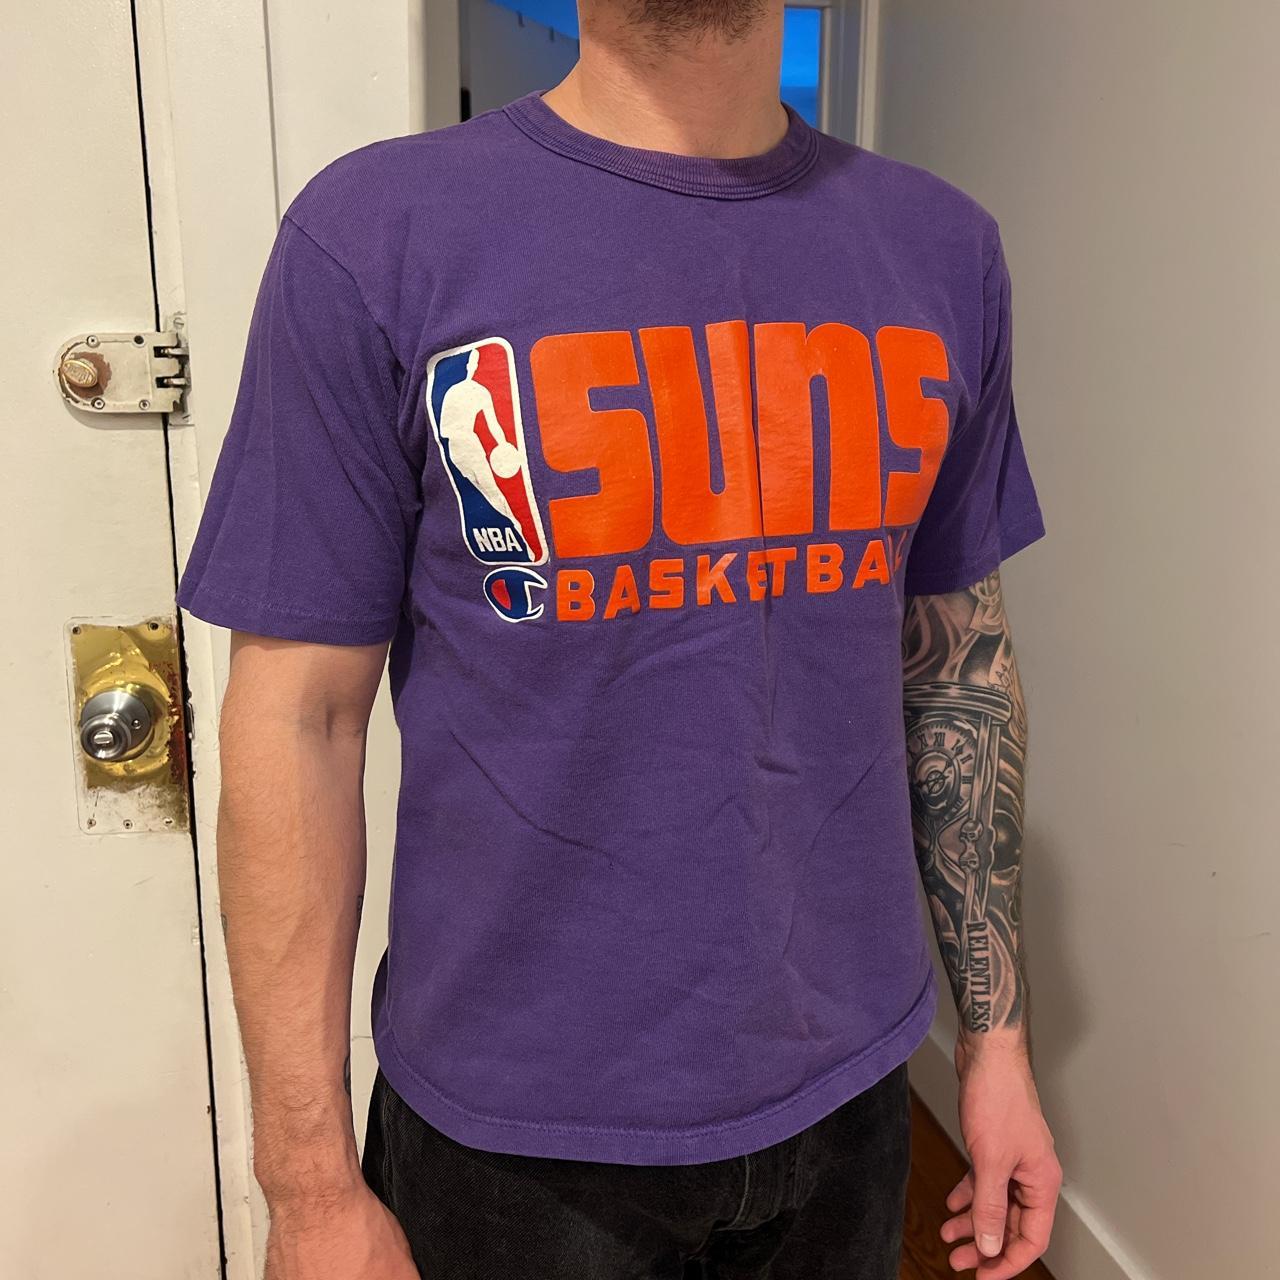 Authentic Champion NBA Suns Basketball T-Shirt Tag - Depop